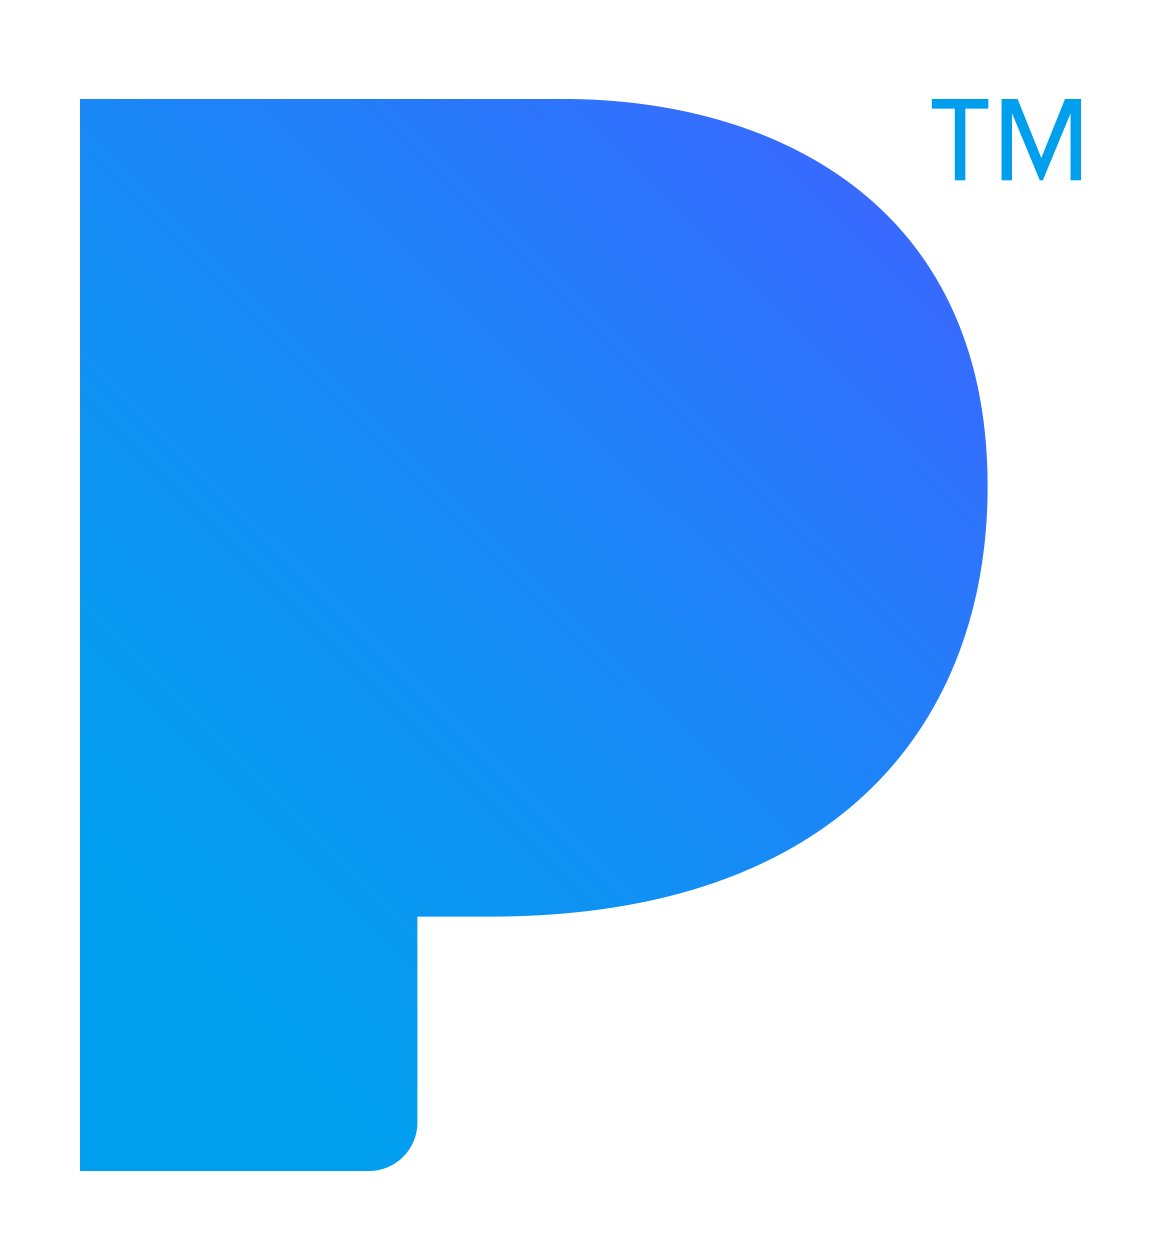 Pandora Logo PNG HD Image 1151x1242 - Pandora Logo Png